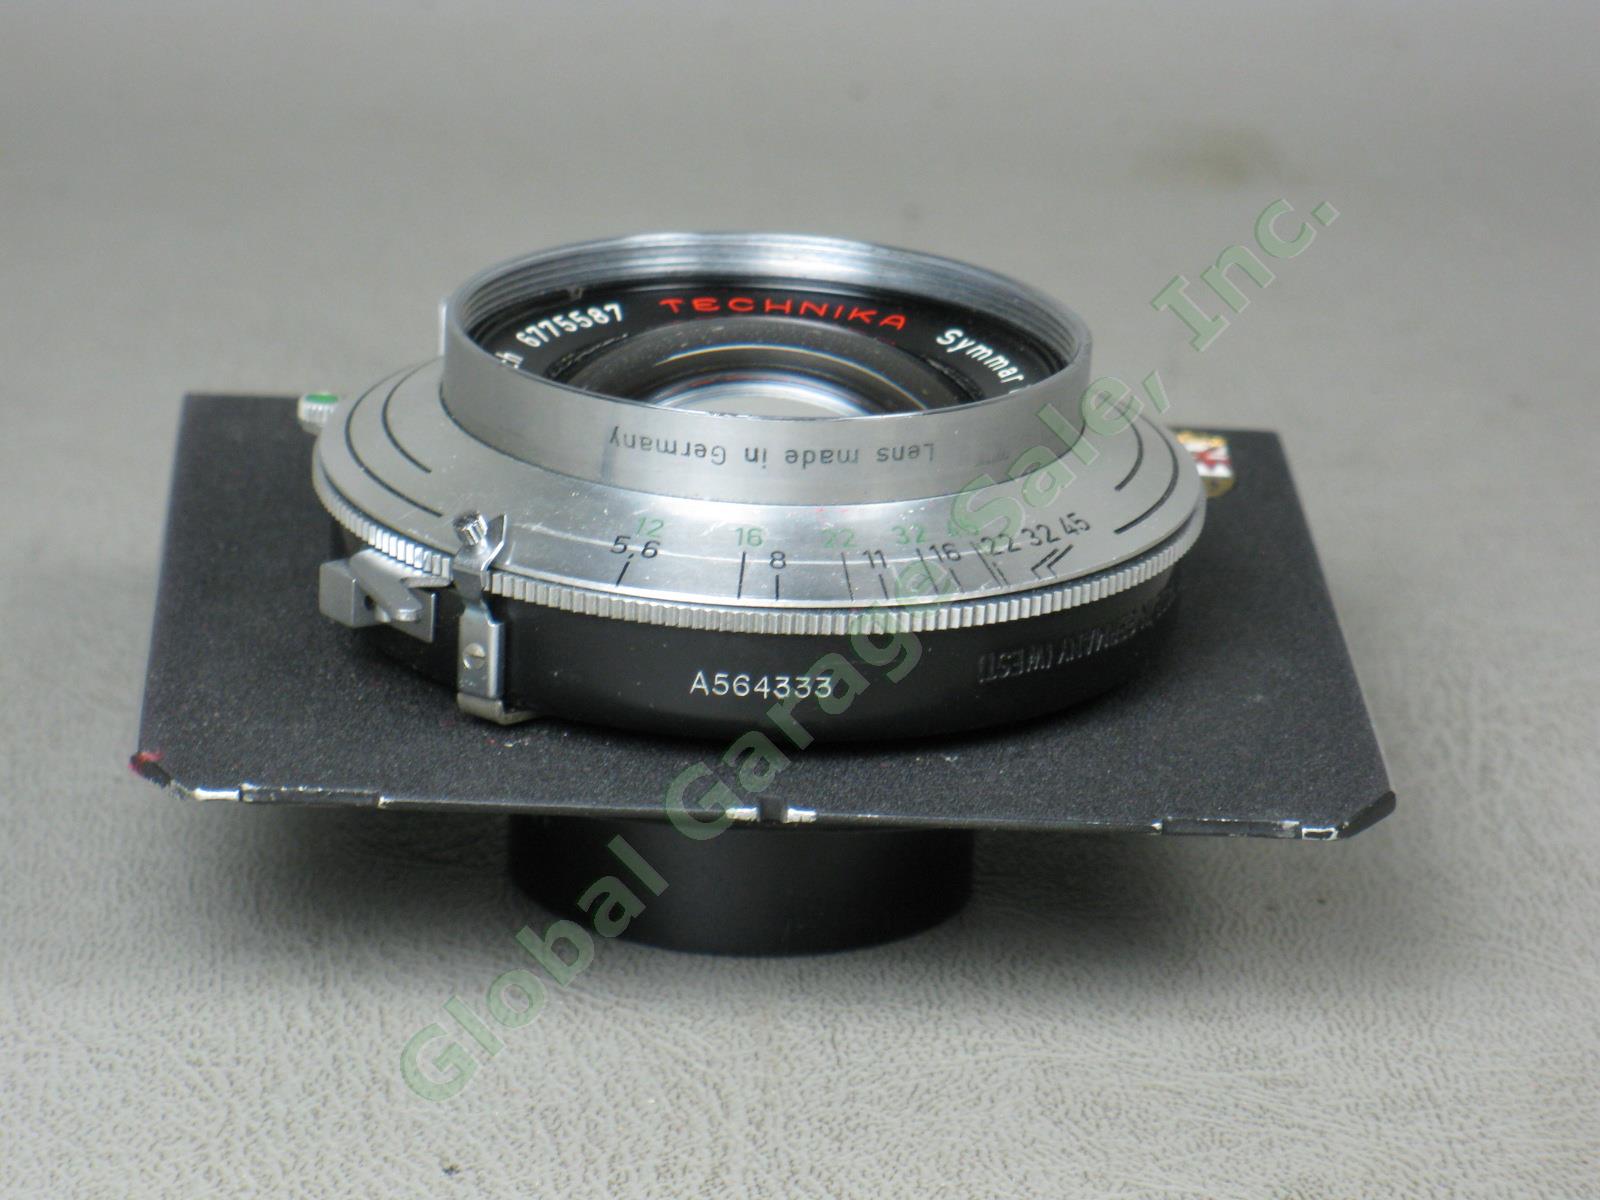 Linhof Technika Symmar 1:5.6 f/5.6 150mm Schneider-Kreuznach Camera Lens 6775587 6